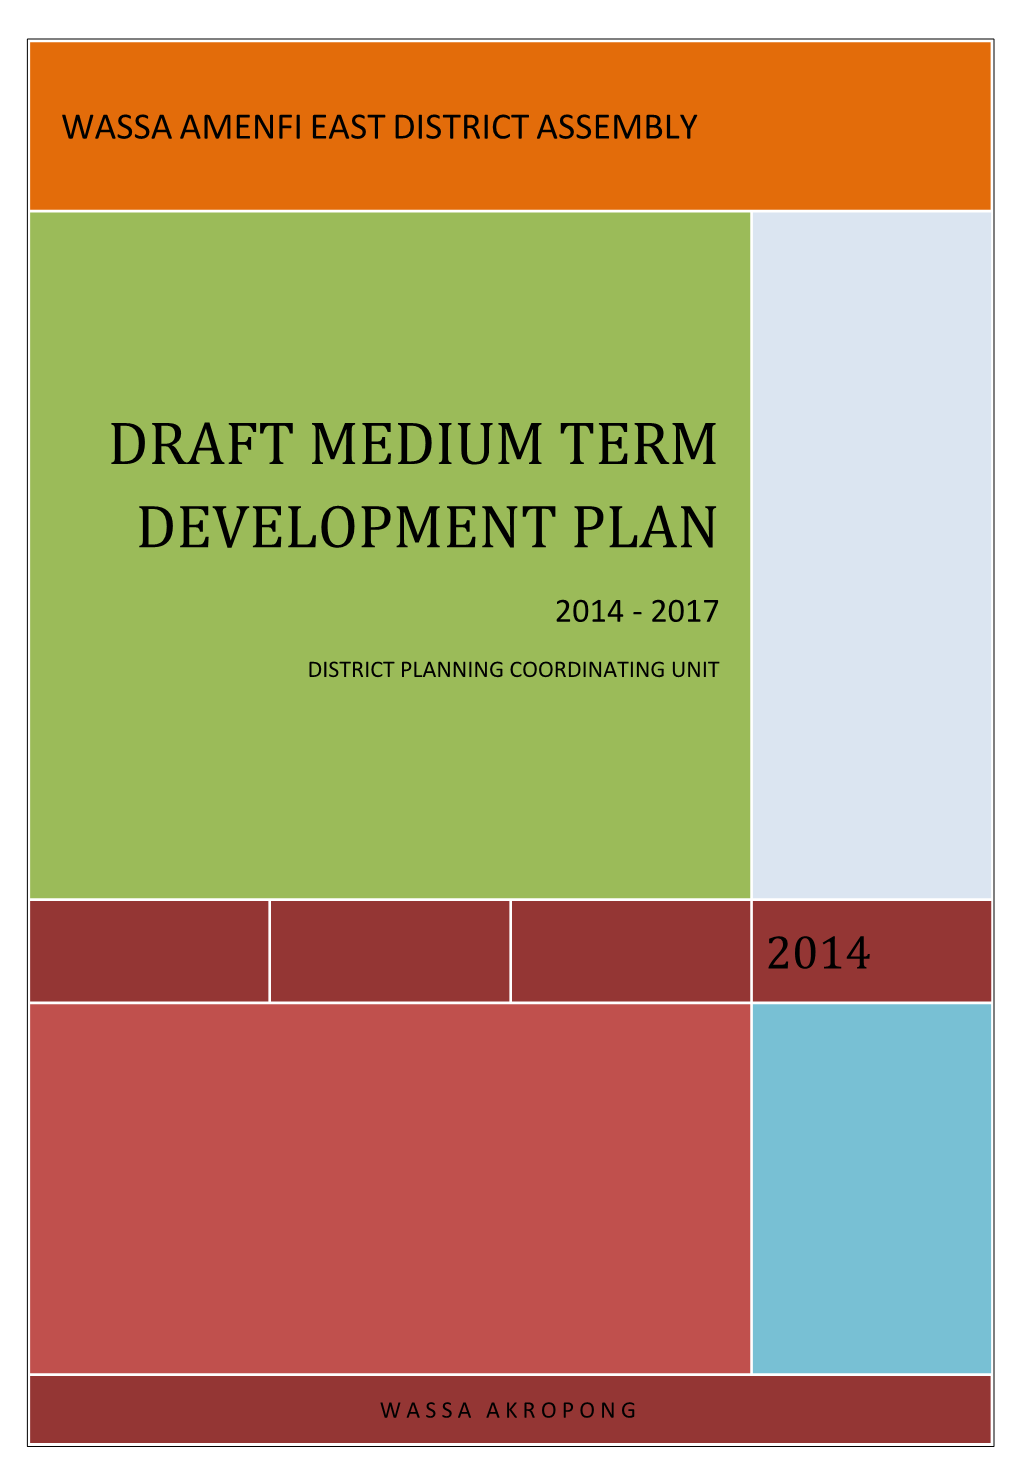 Draft Medium Term Development Plan